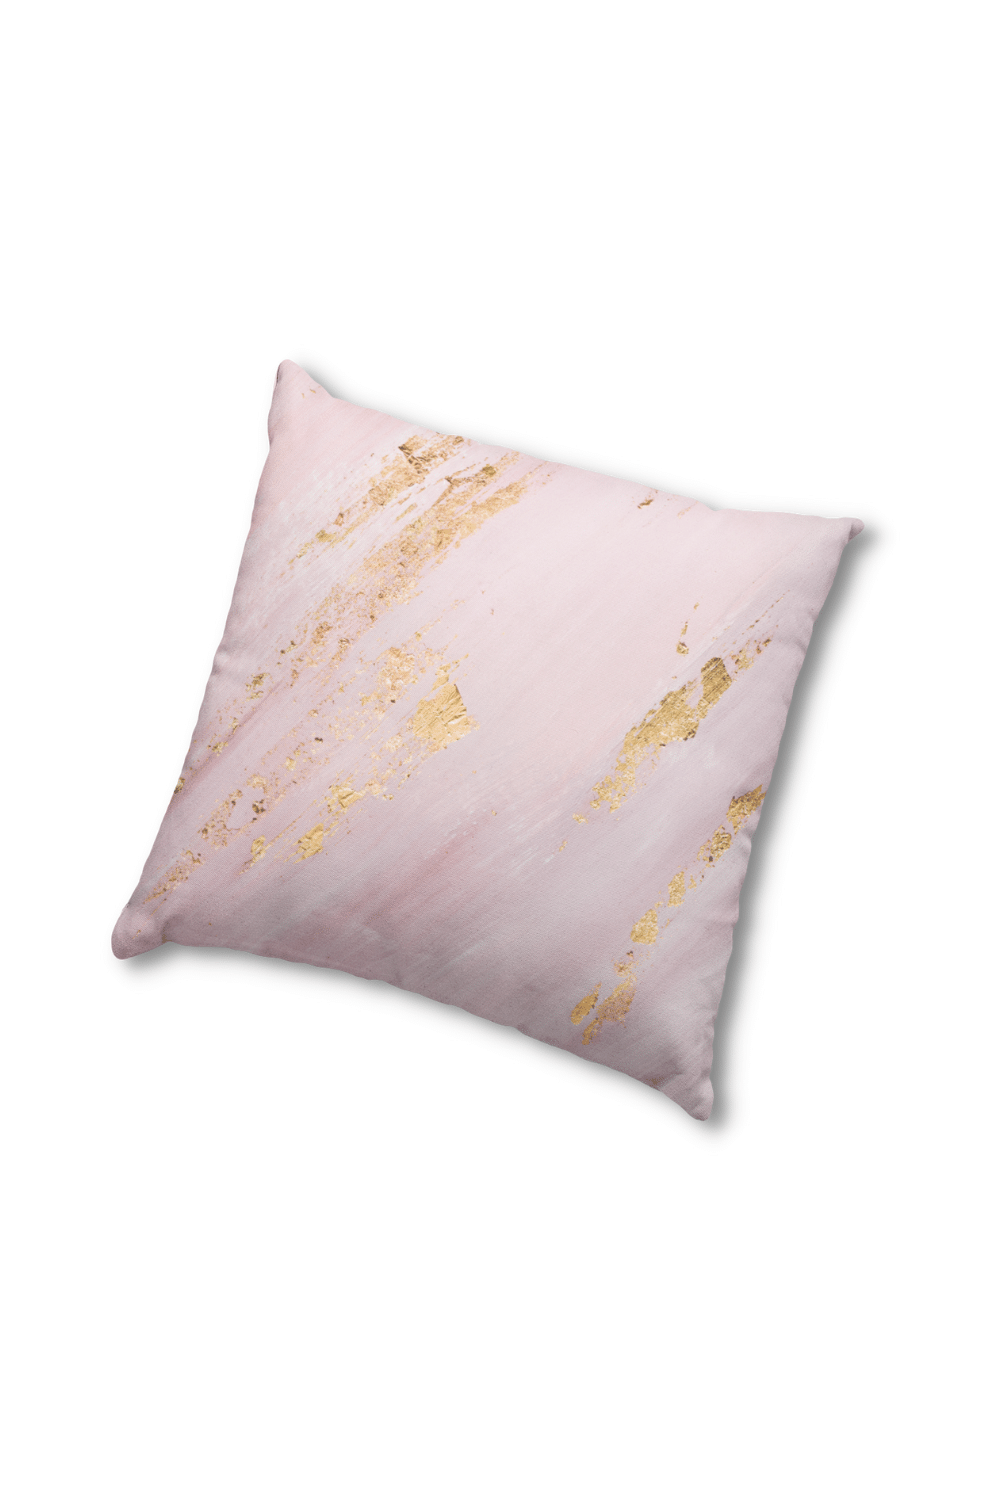 Pillows - Dorm Room Pillow - Pink & Gold Abstract